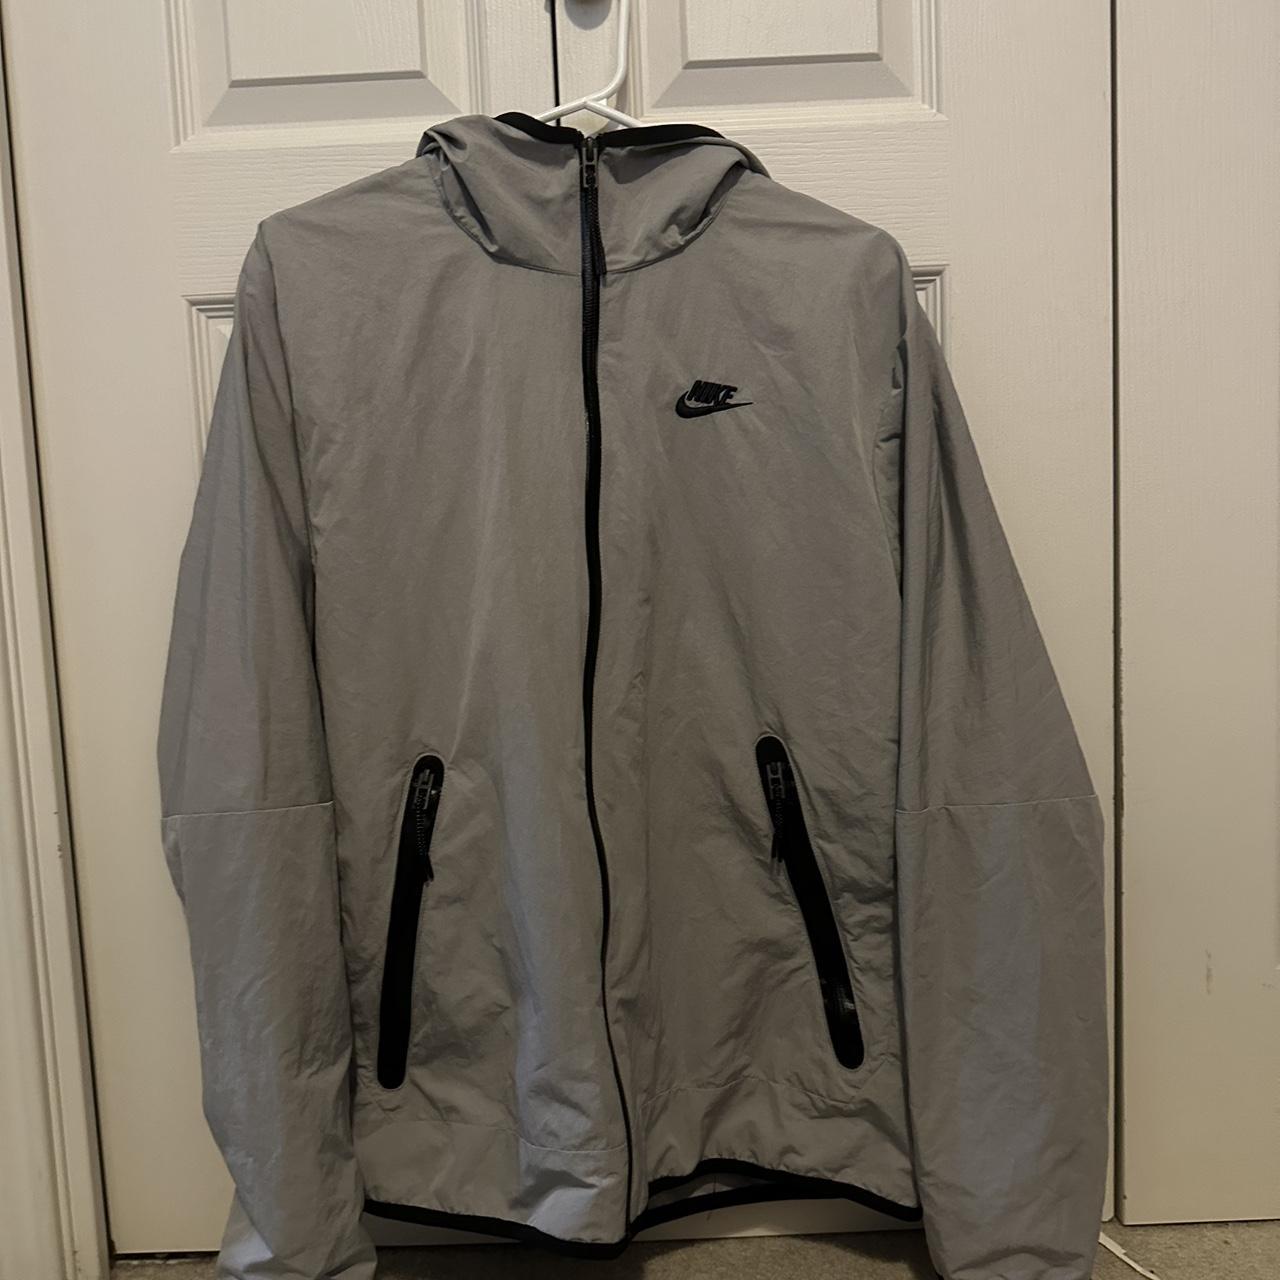 Nike tech woven reflective jacket size:... - Depop